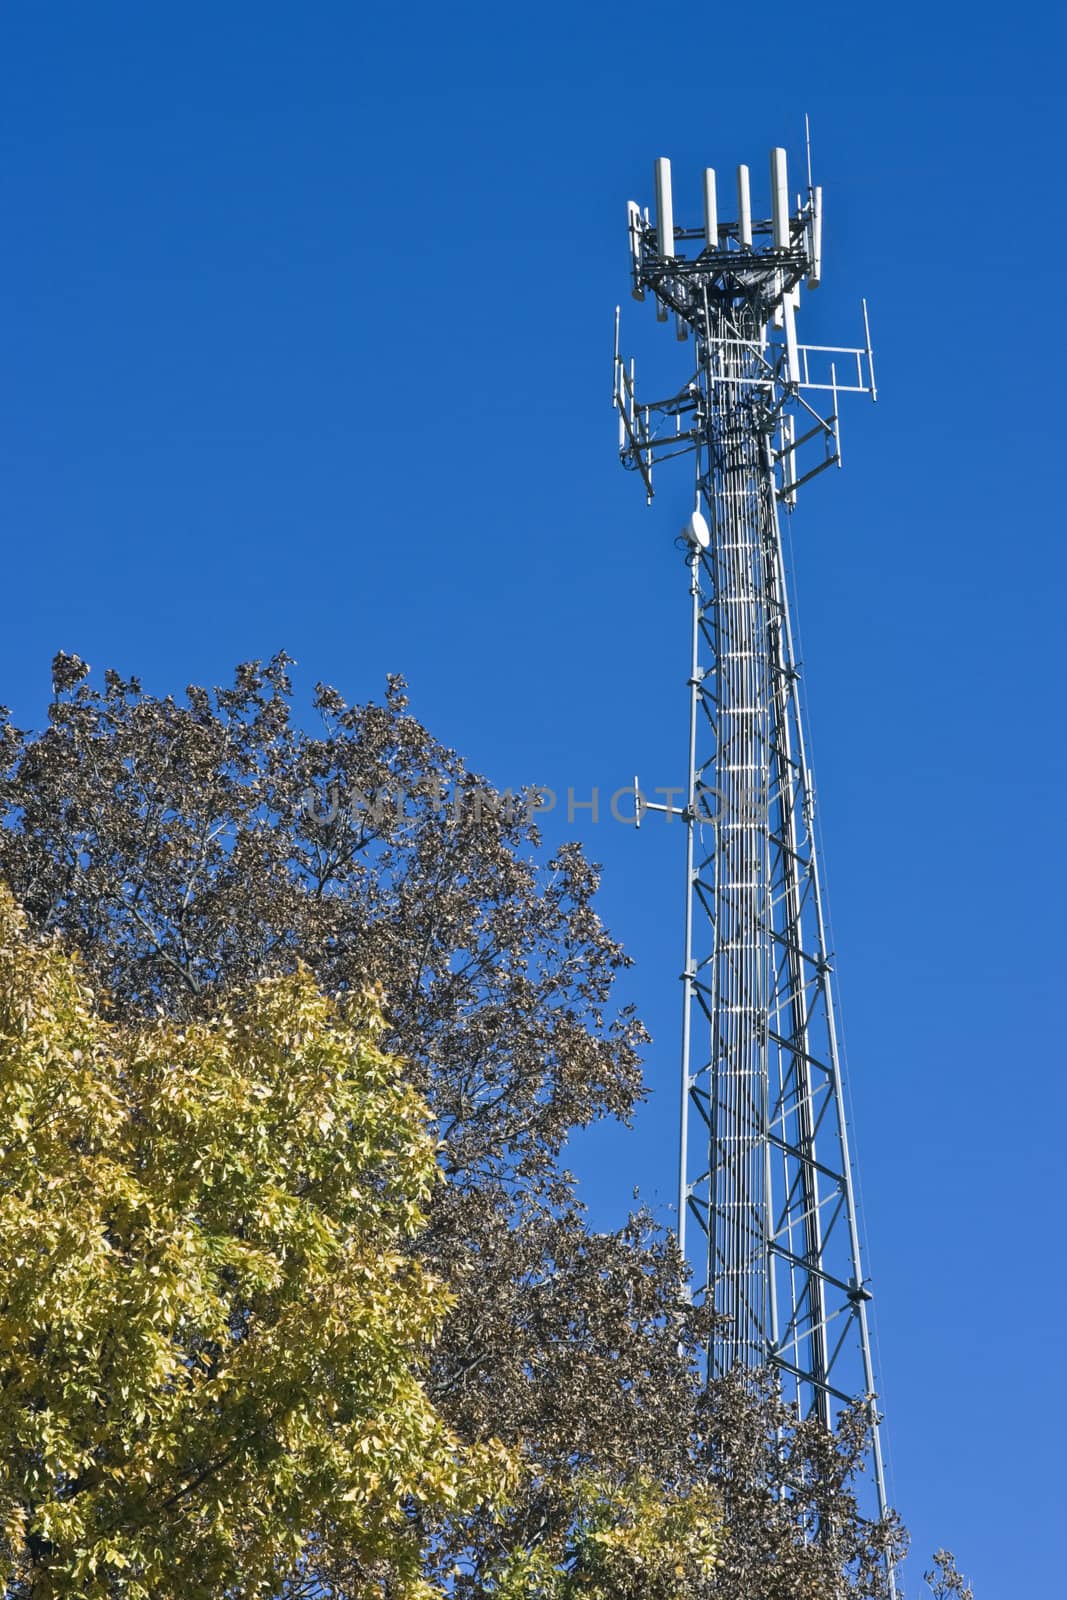 Lattice Tower with cellular antennas.